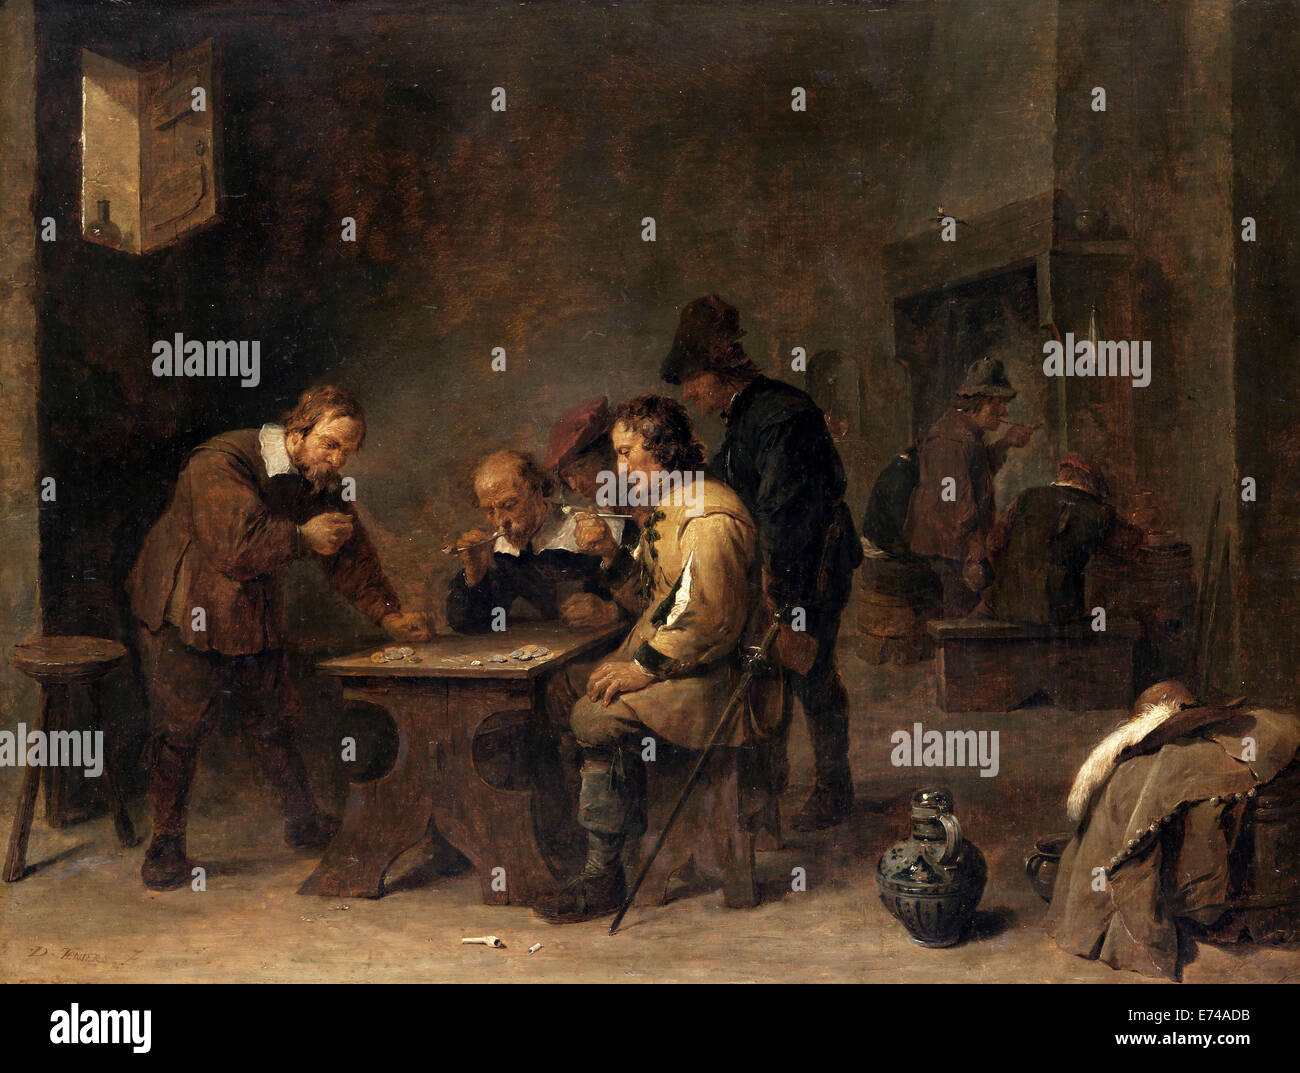 The Gamblers - by David Teniers, 1640 Stock Photo